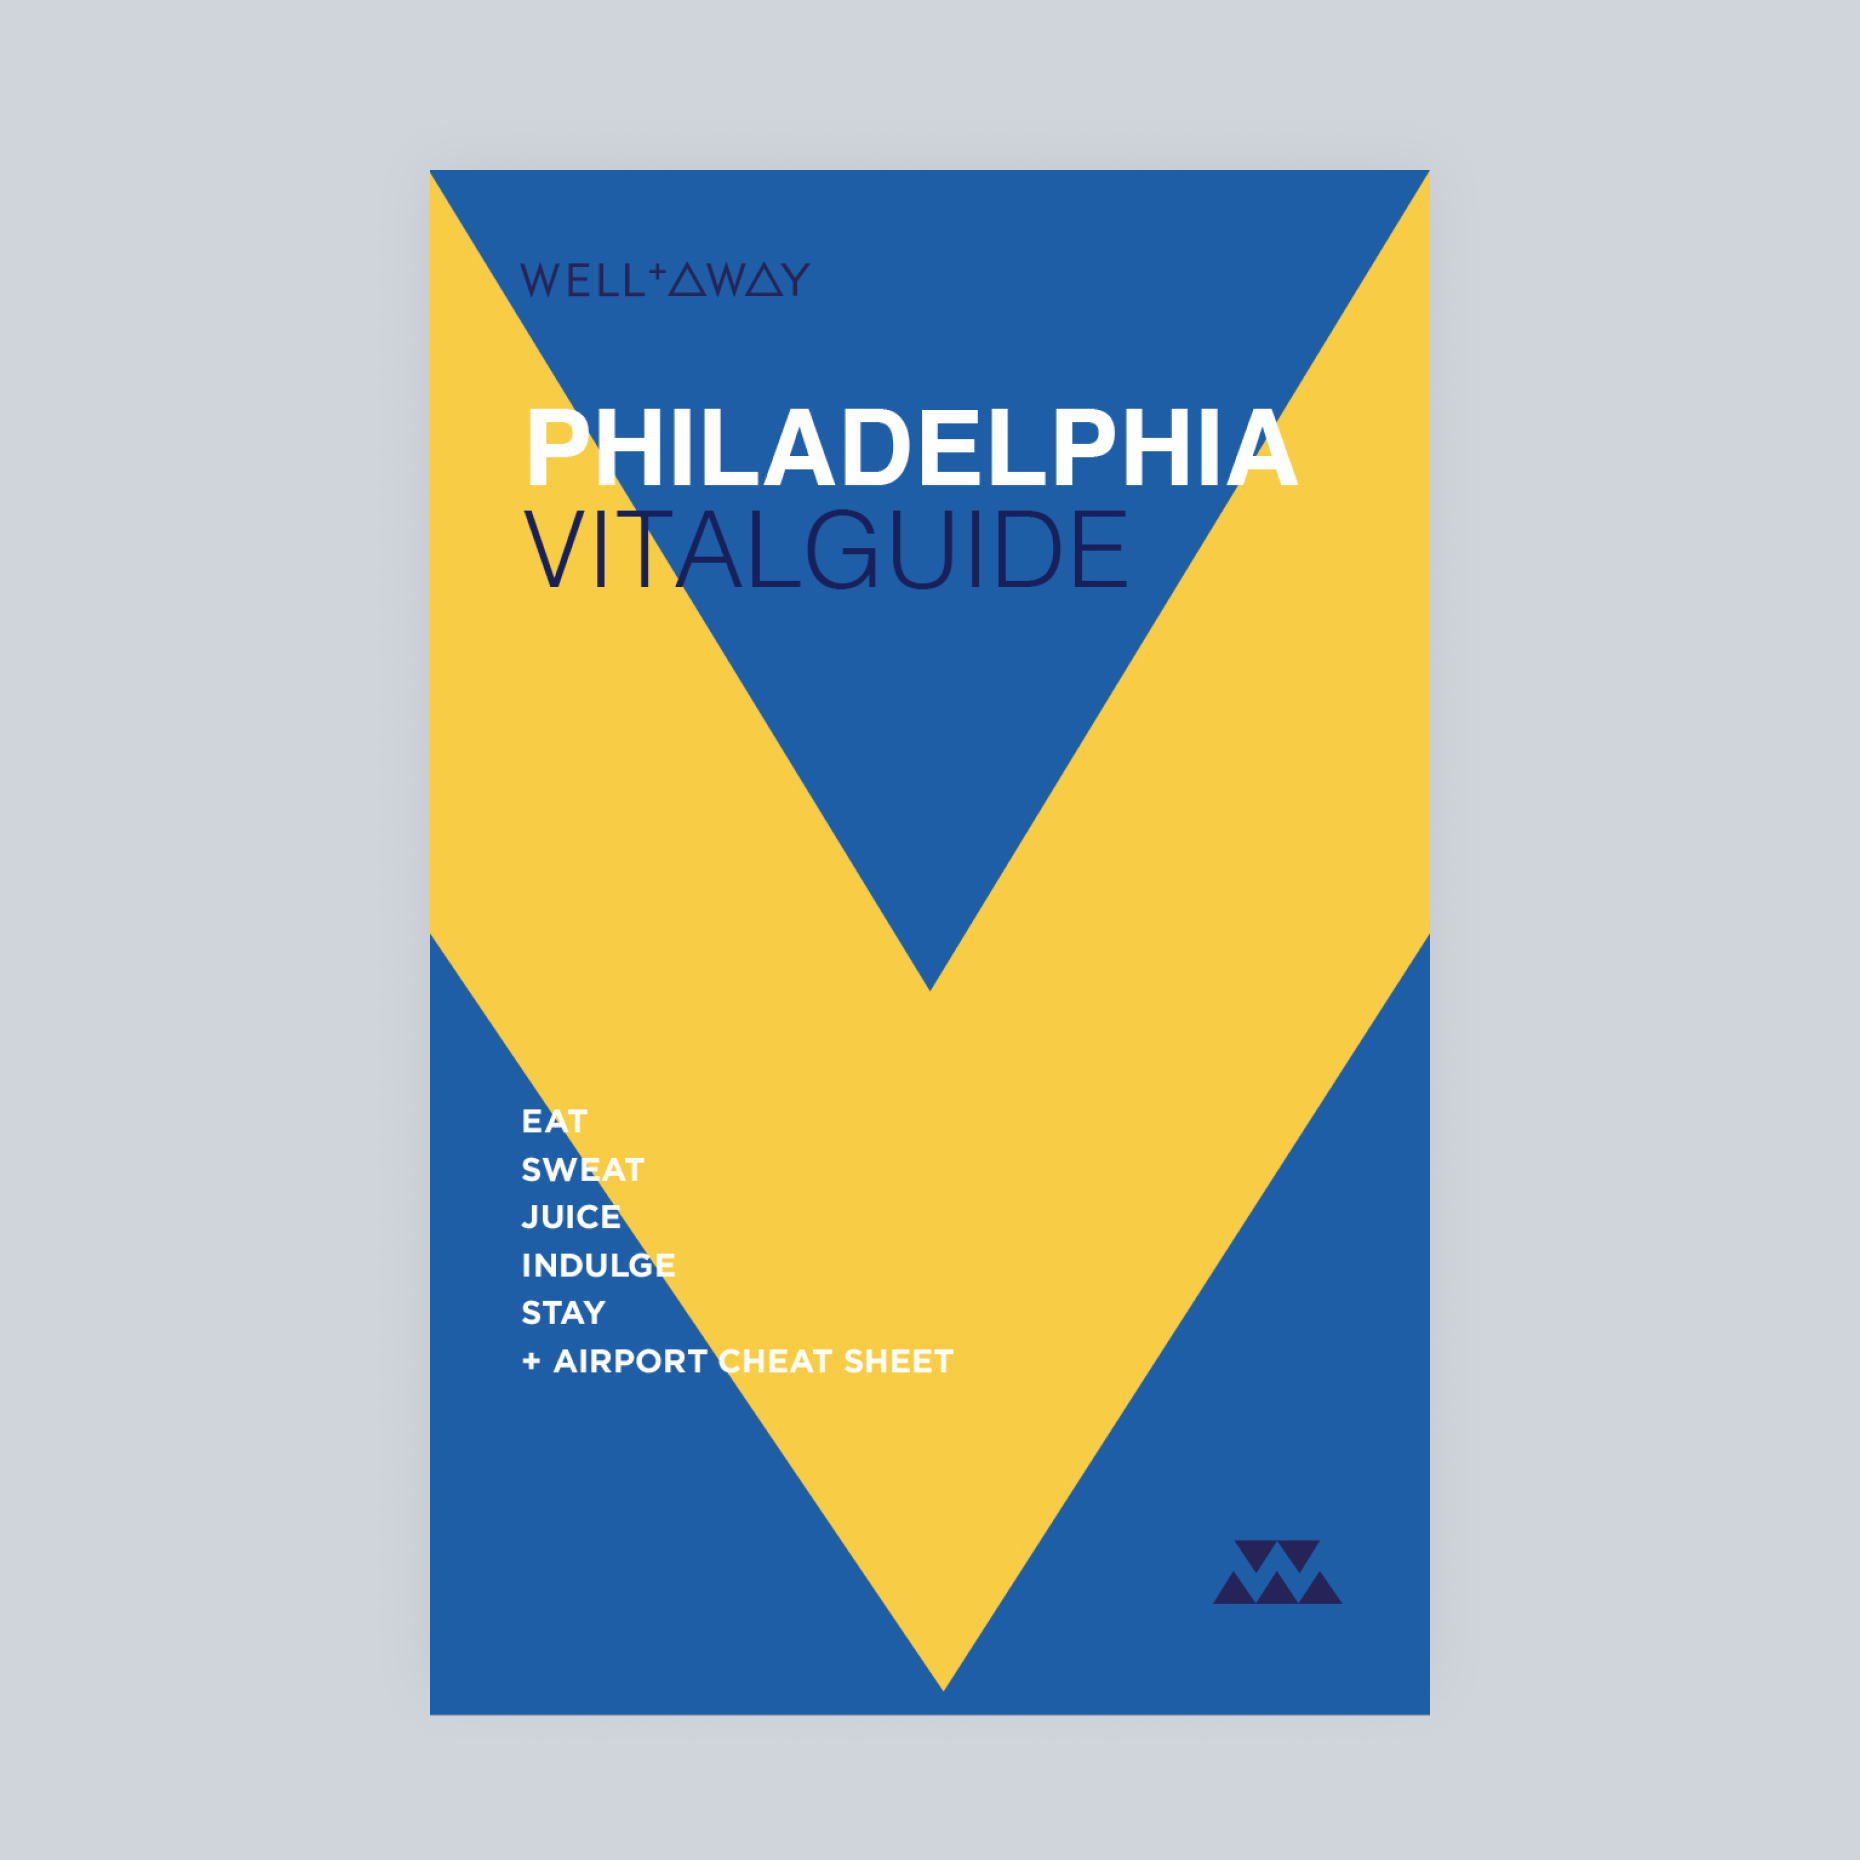 Philadelphia VitalGuide, 1st edition